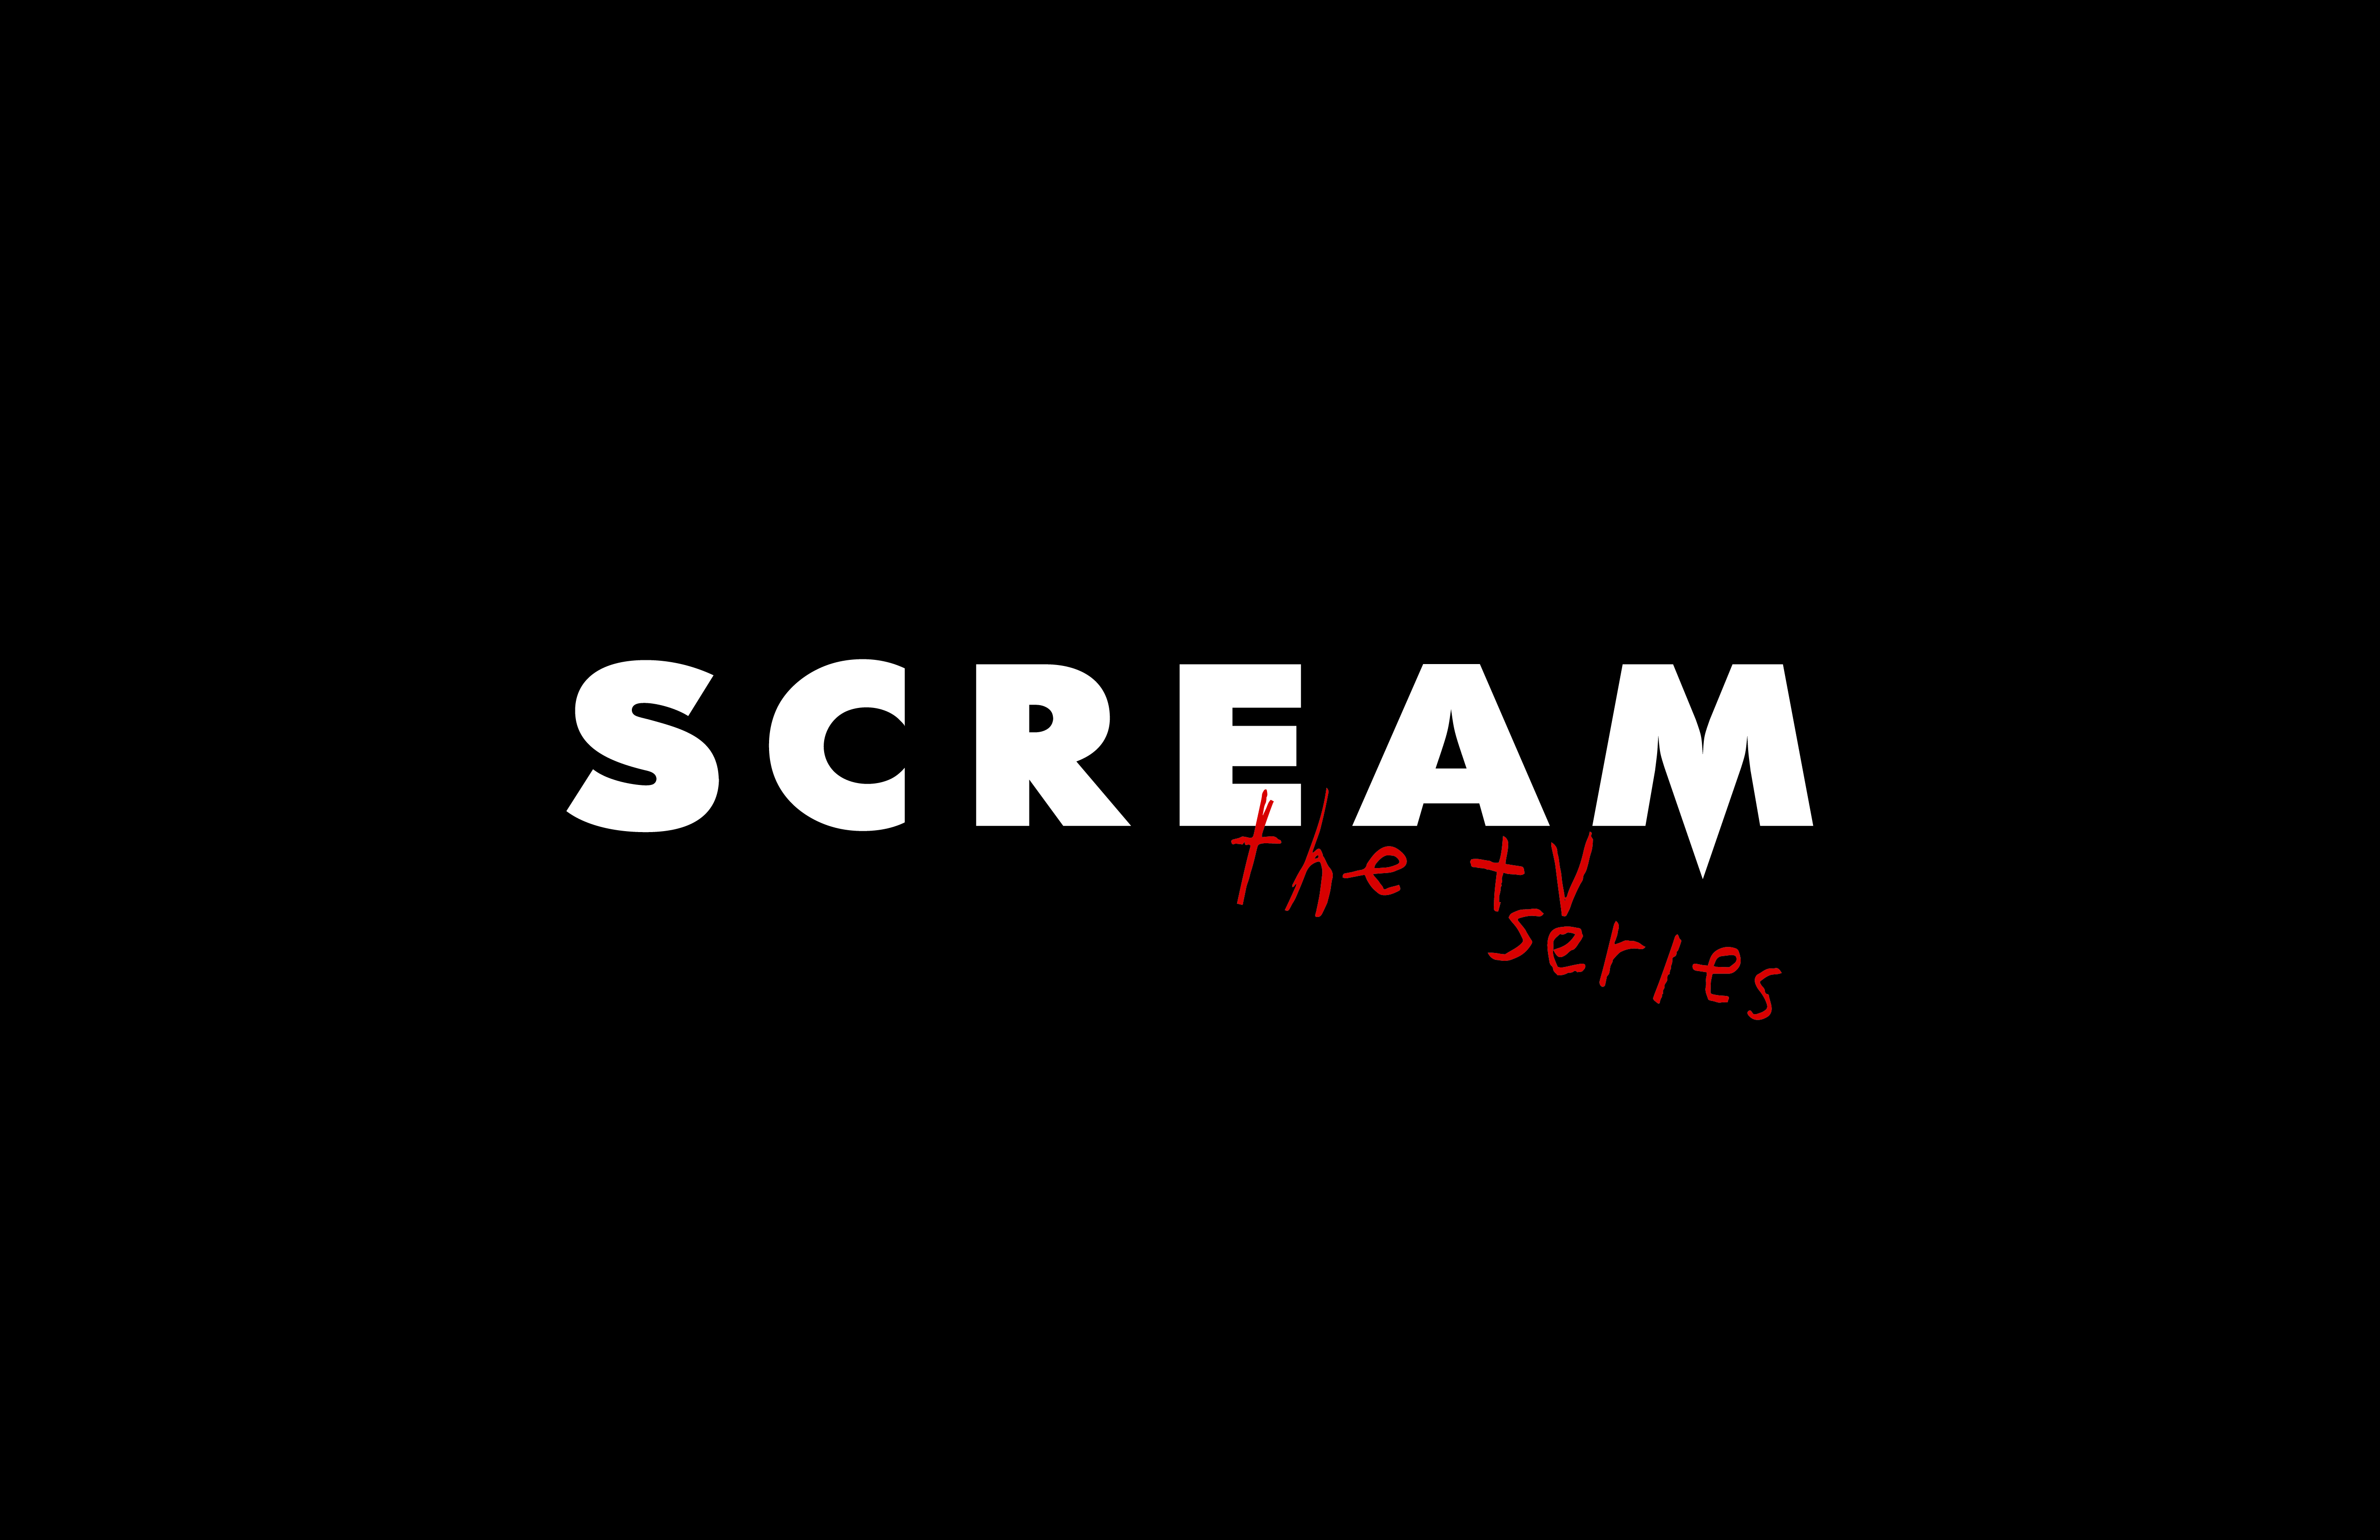 Scream 2.03- “Vacancy”